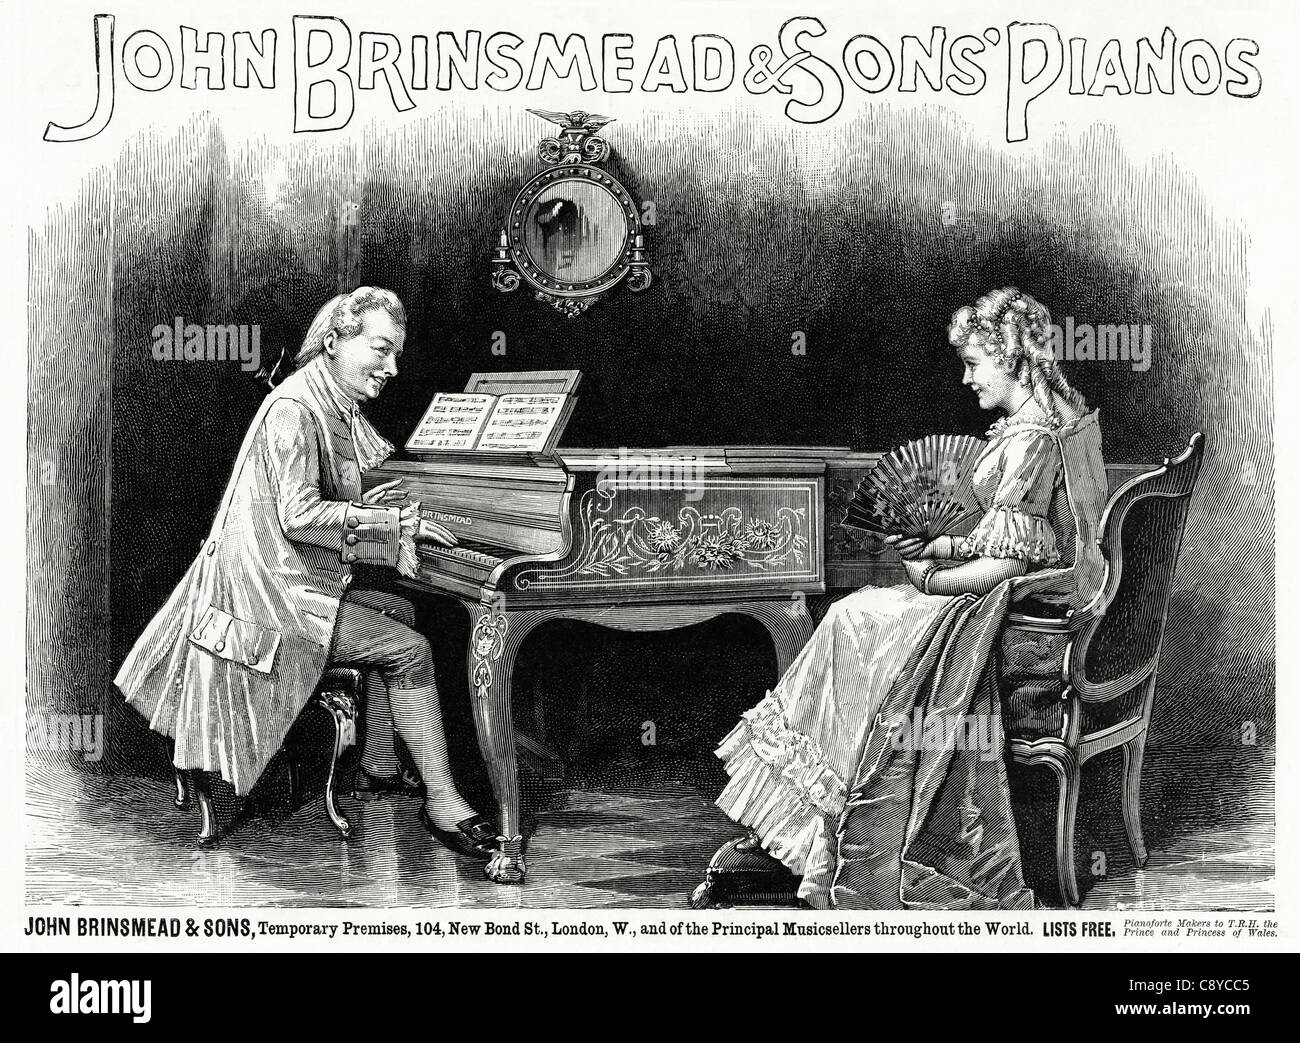 JOHN BRINSMEAD & SONS PIANOS advert. Original Victorian advertisement circa 1892 advertising Stock Photo